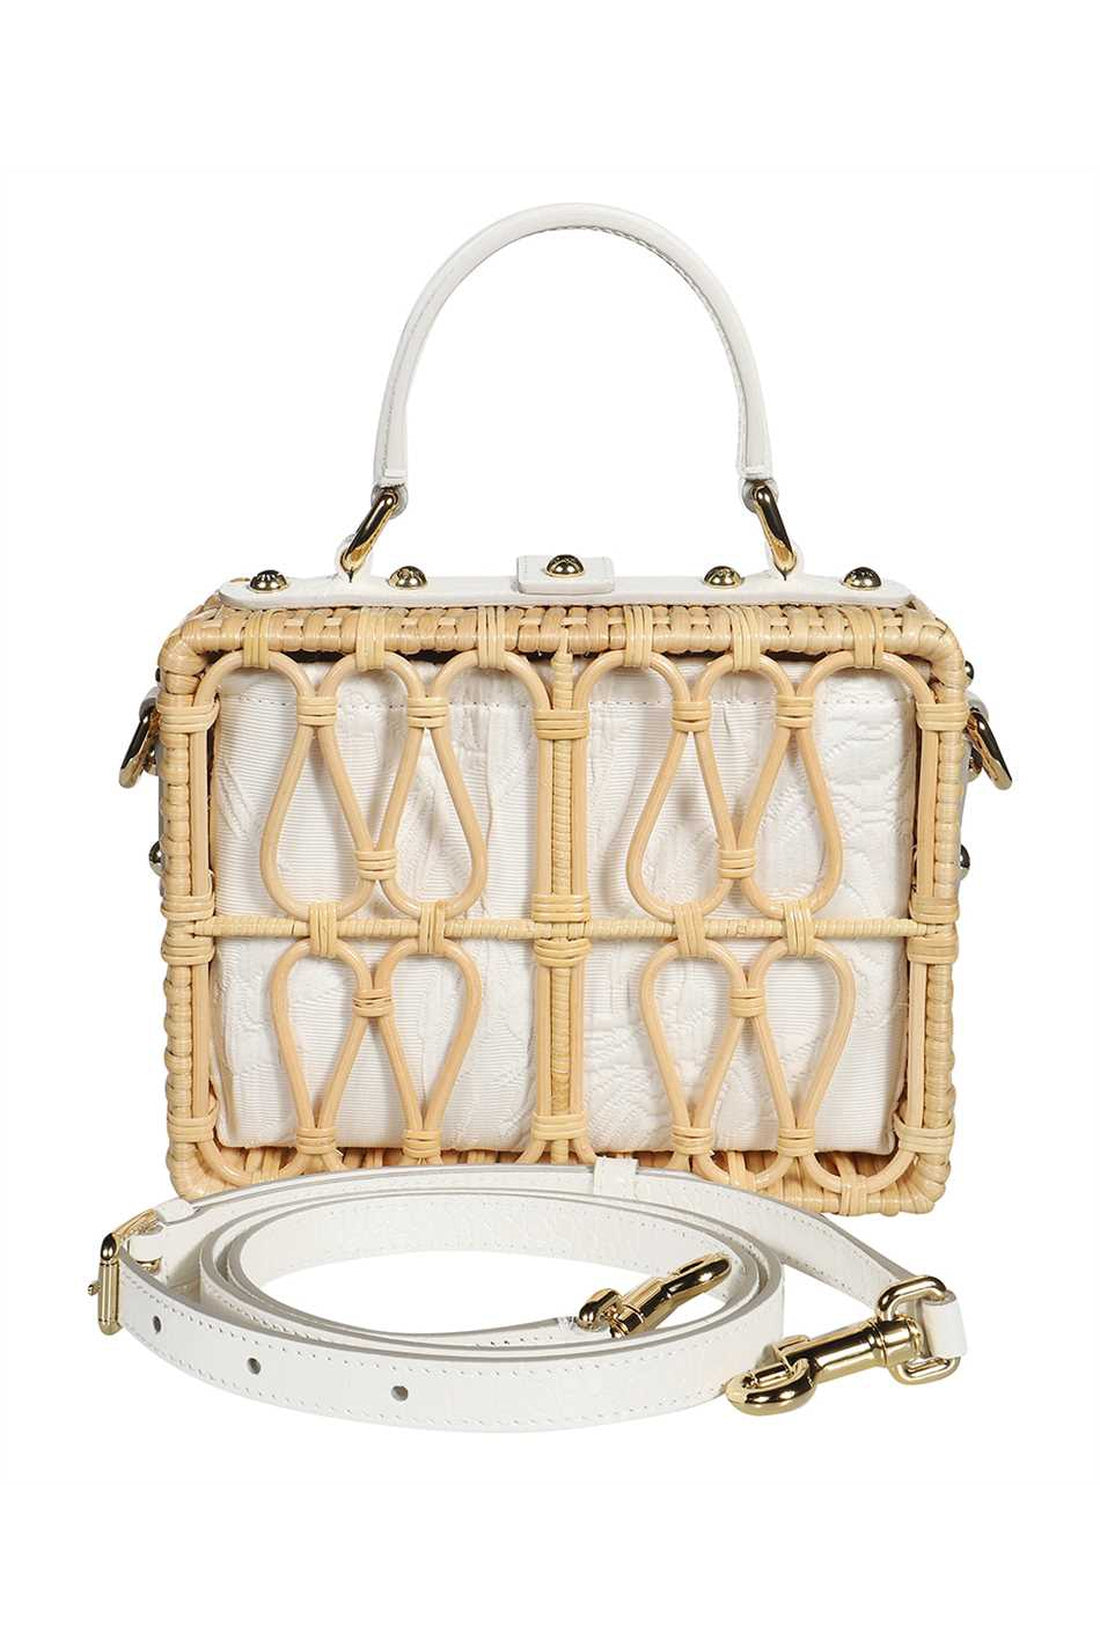 Dolce & Gabbana-OUTLET-SALE-Dolce Box handbag-ARCHIVIST